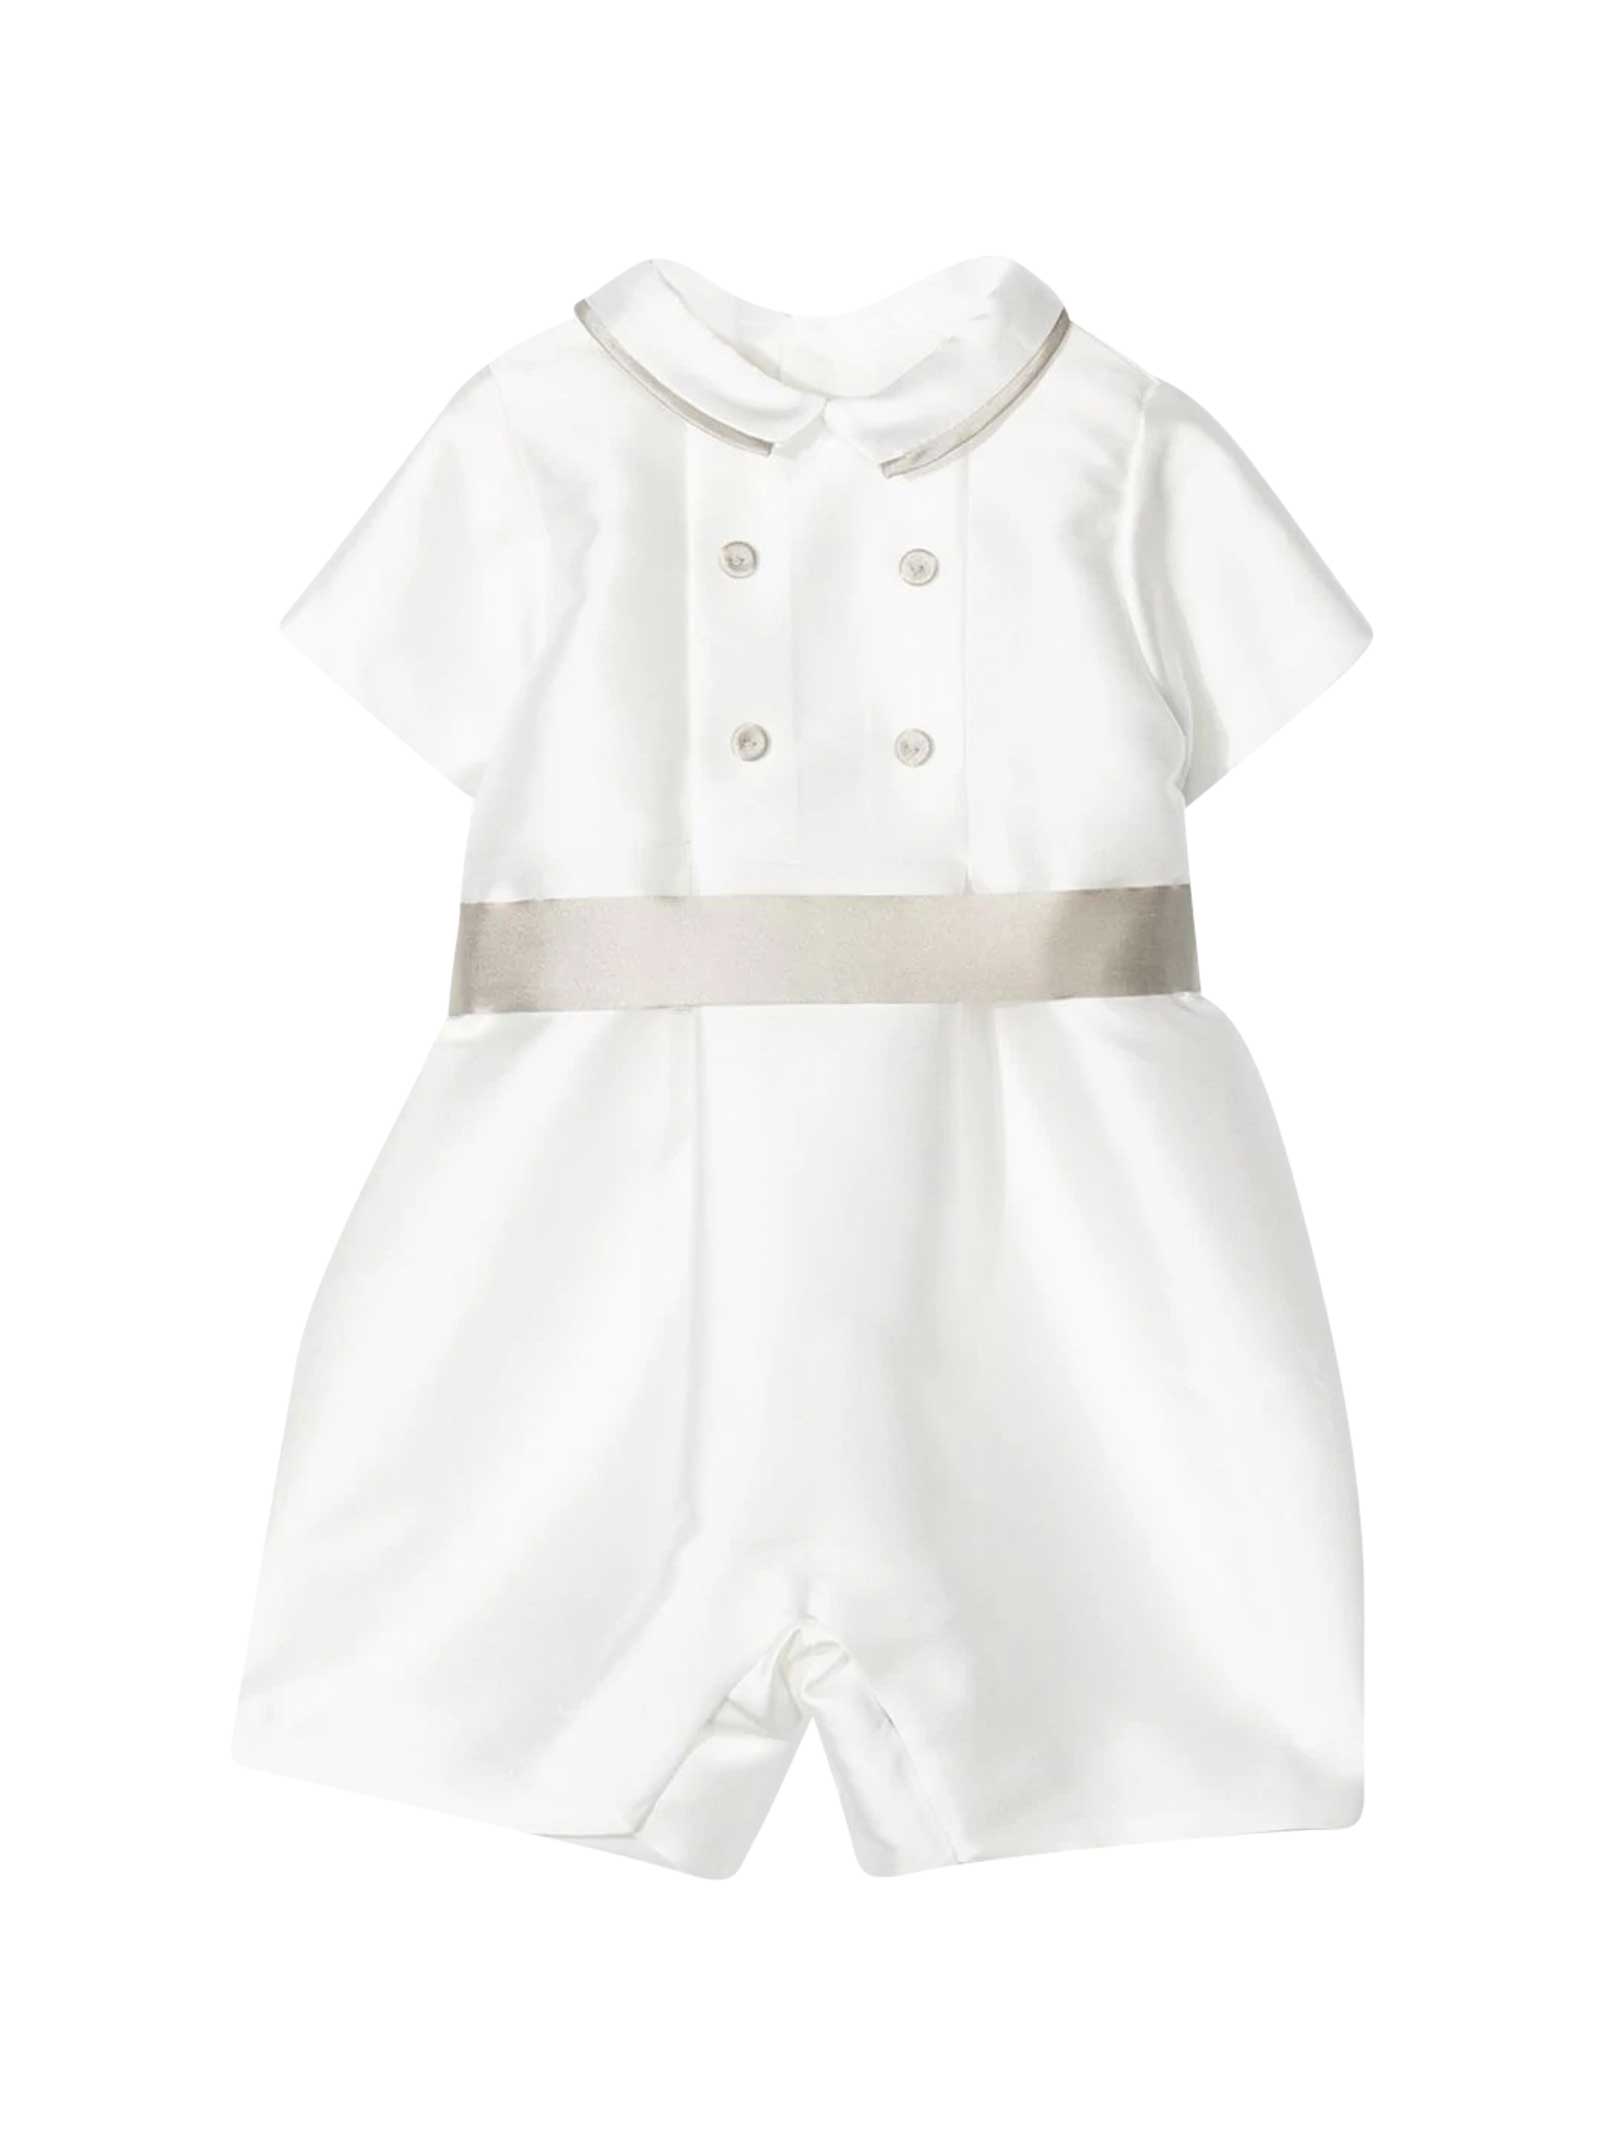 La stupenderia White Baby Suit